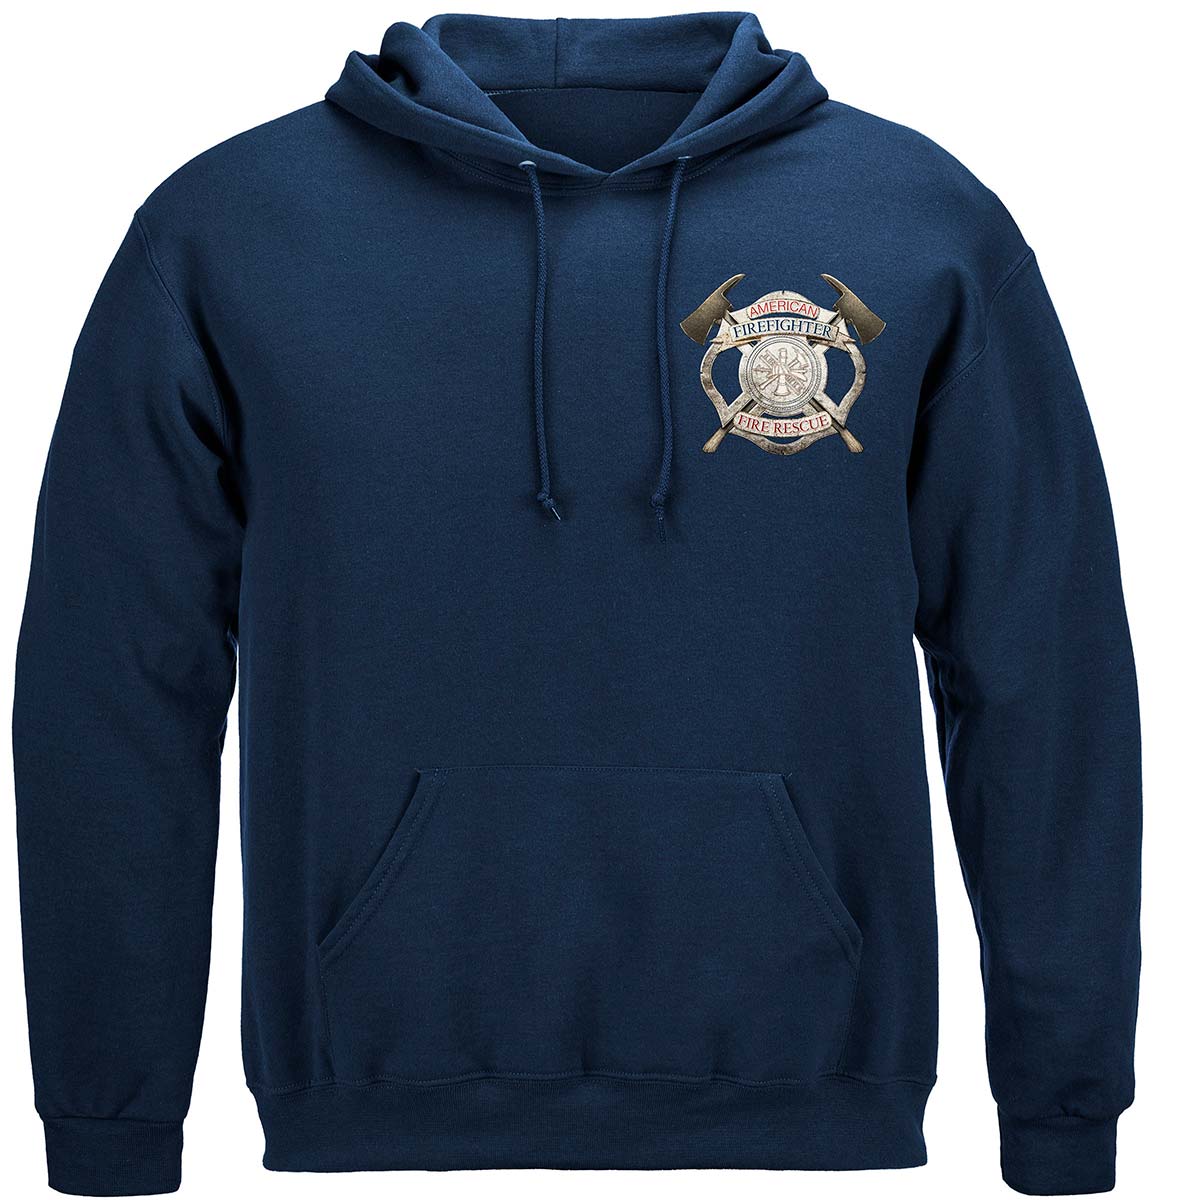 Firefighter American Made Premium T-Shirt